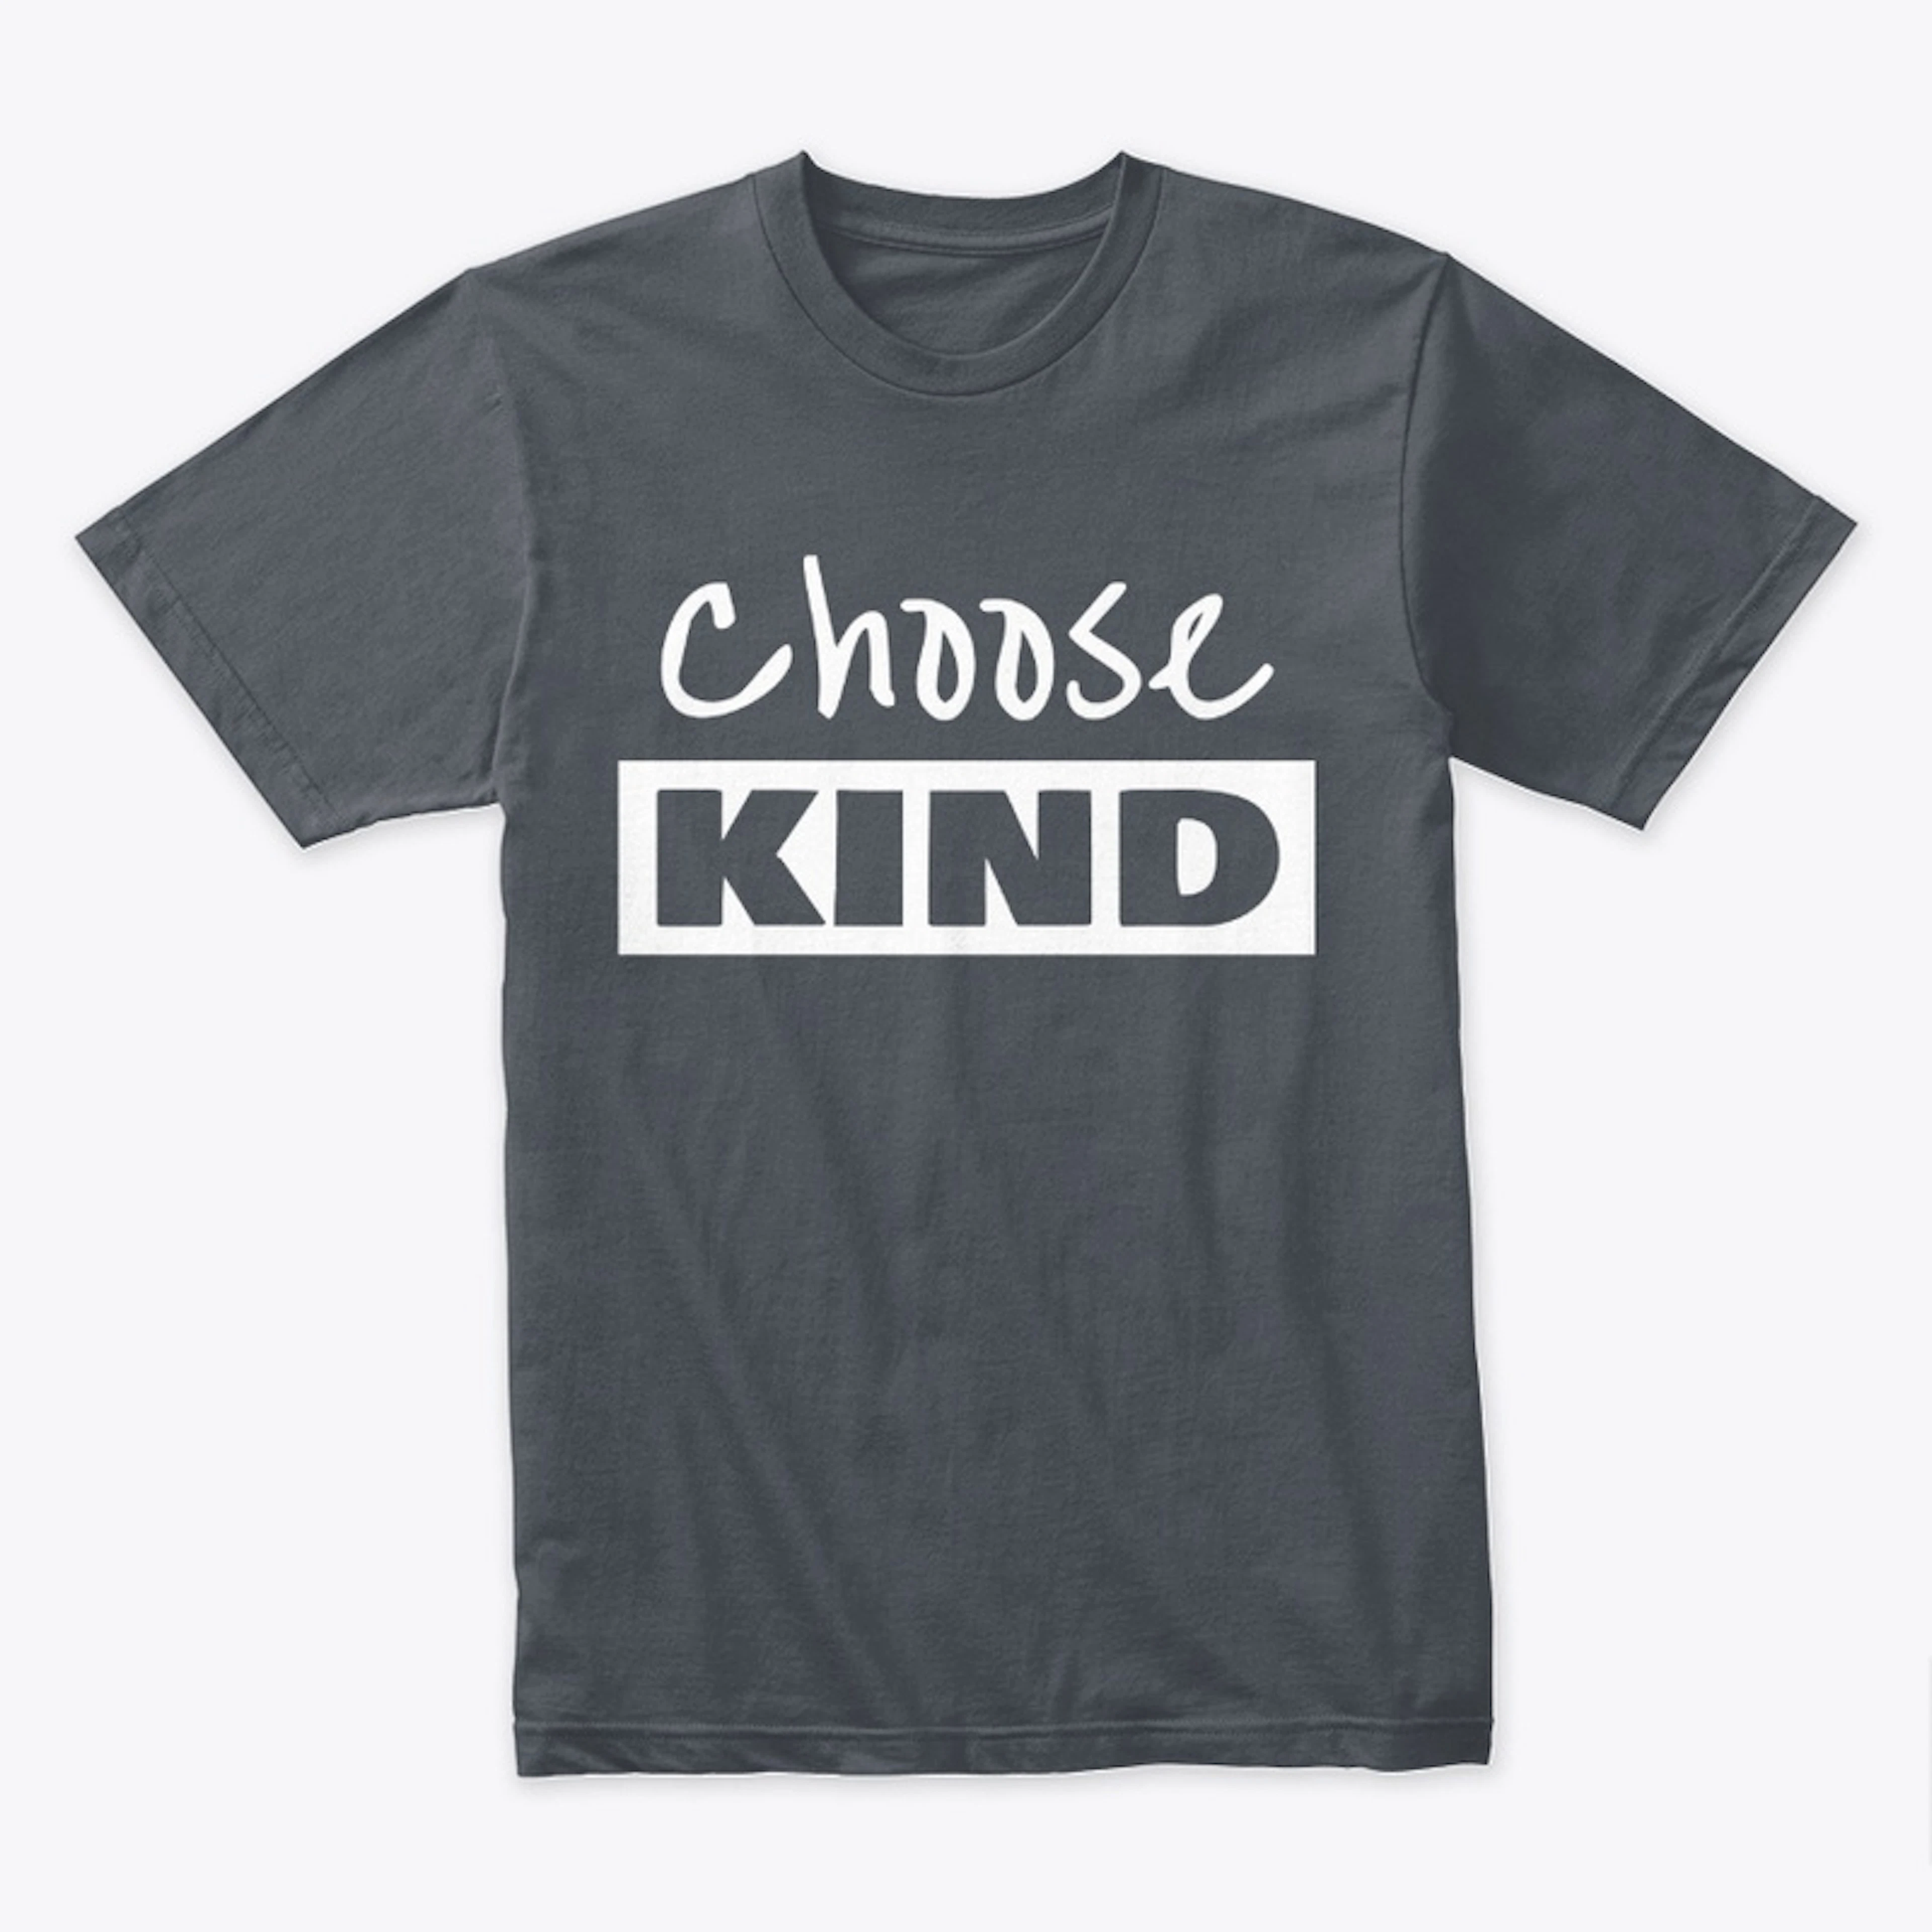 Choose KIND Shirt